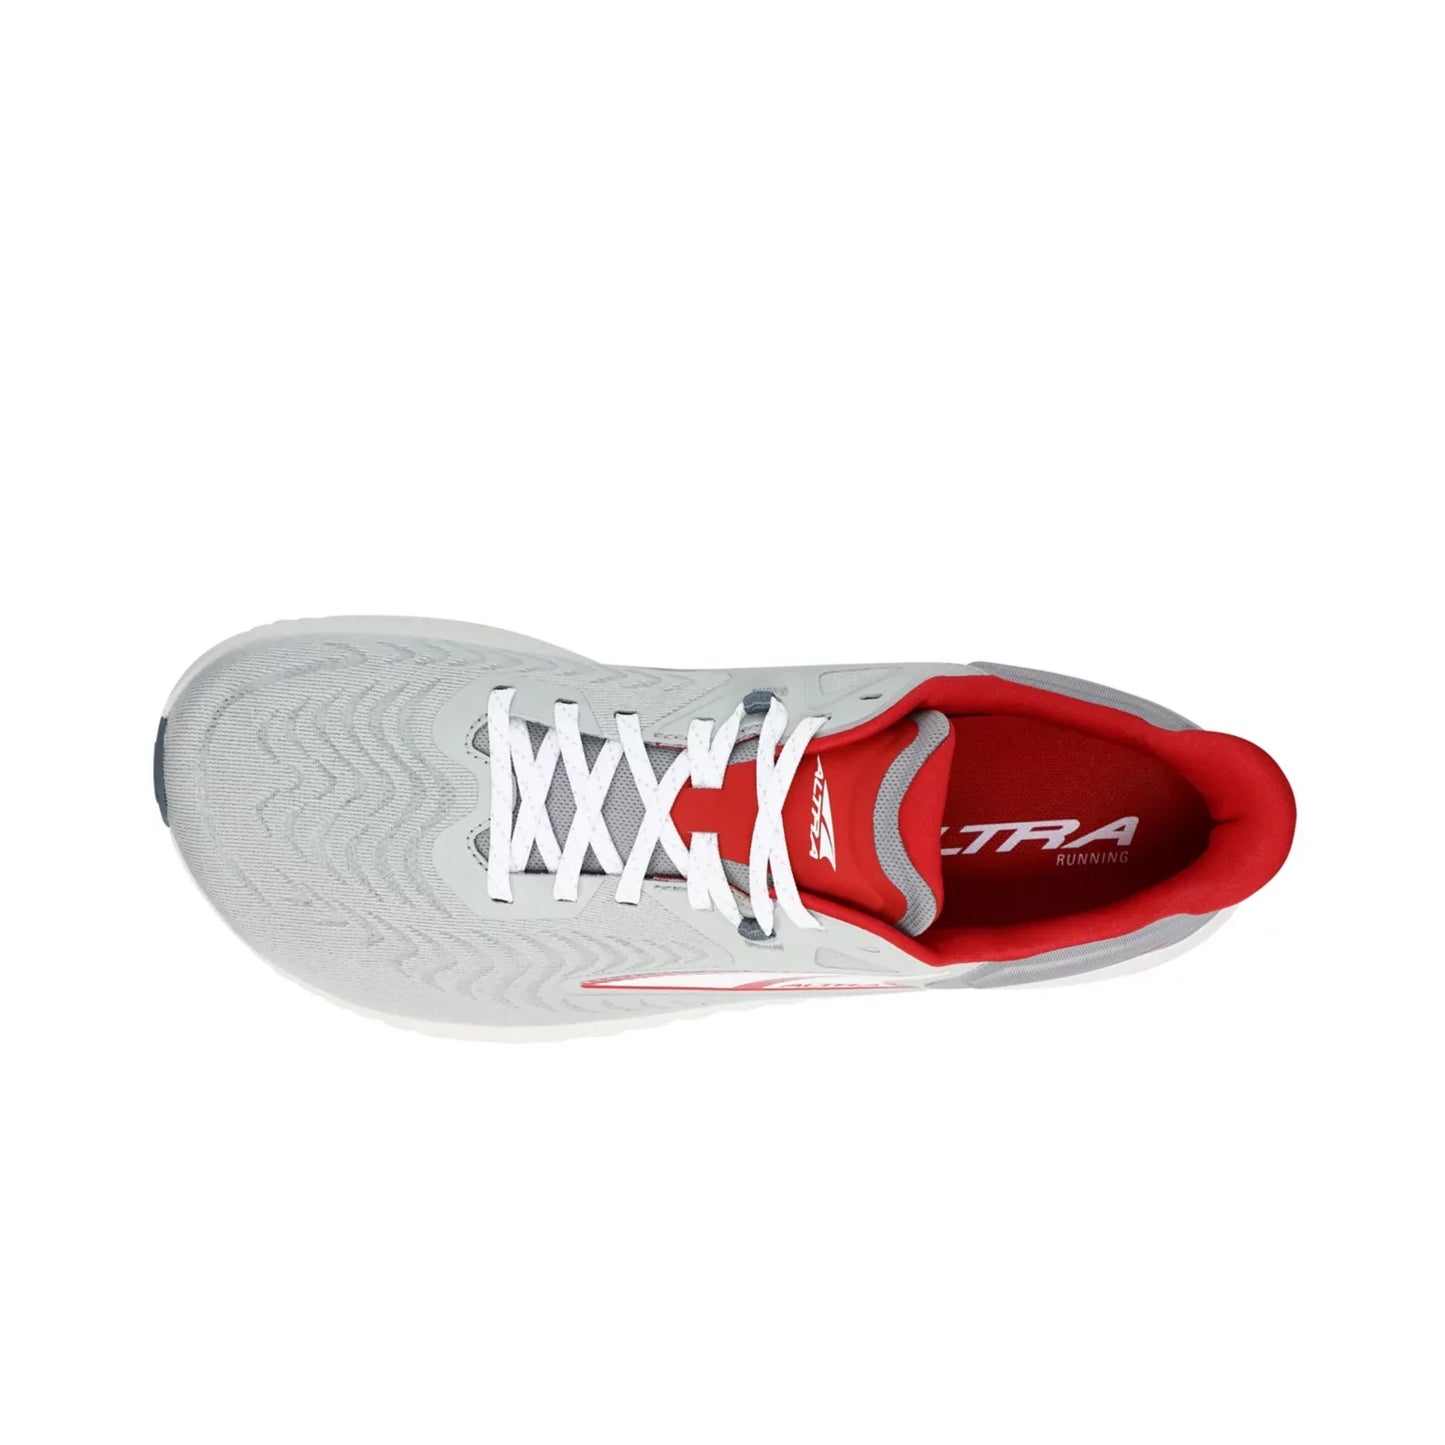 Altra Men's Torin 7 Running Sneakers - Gray/Red